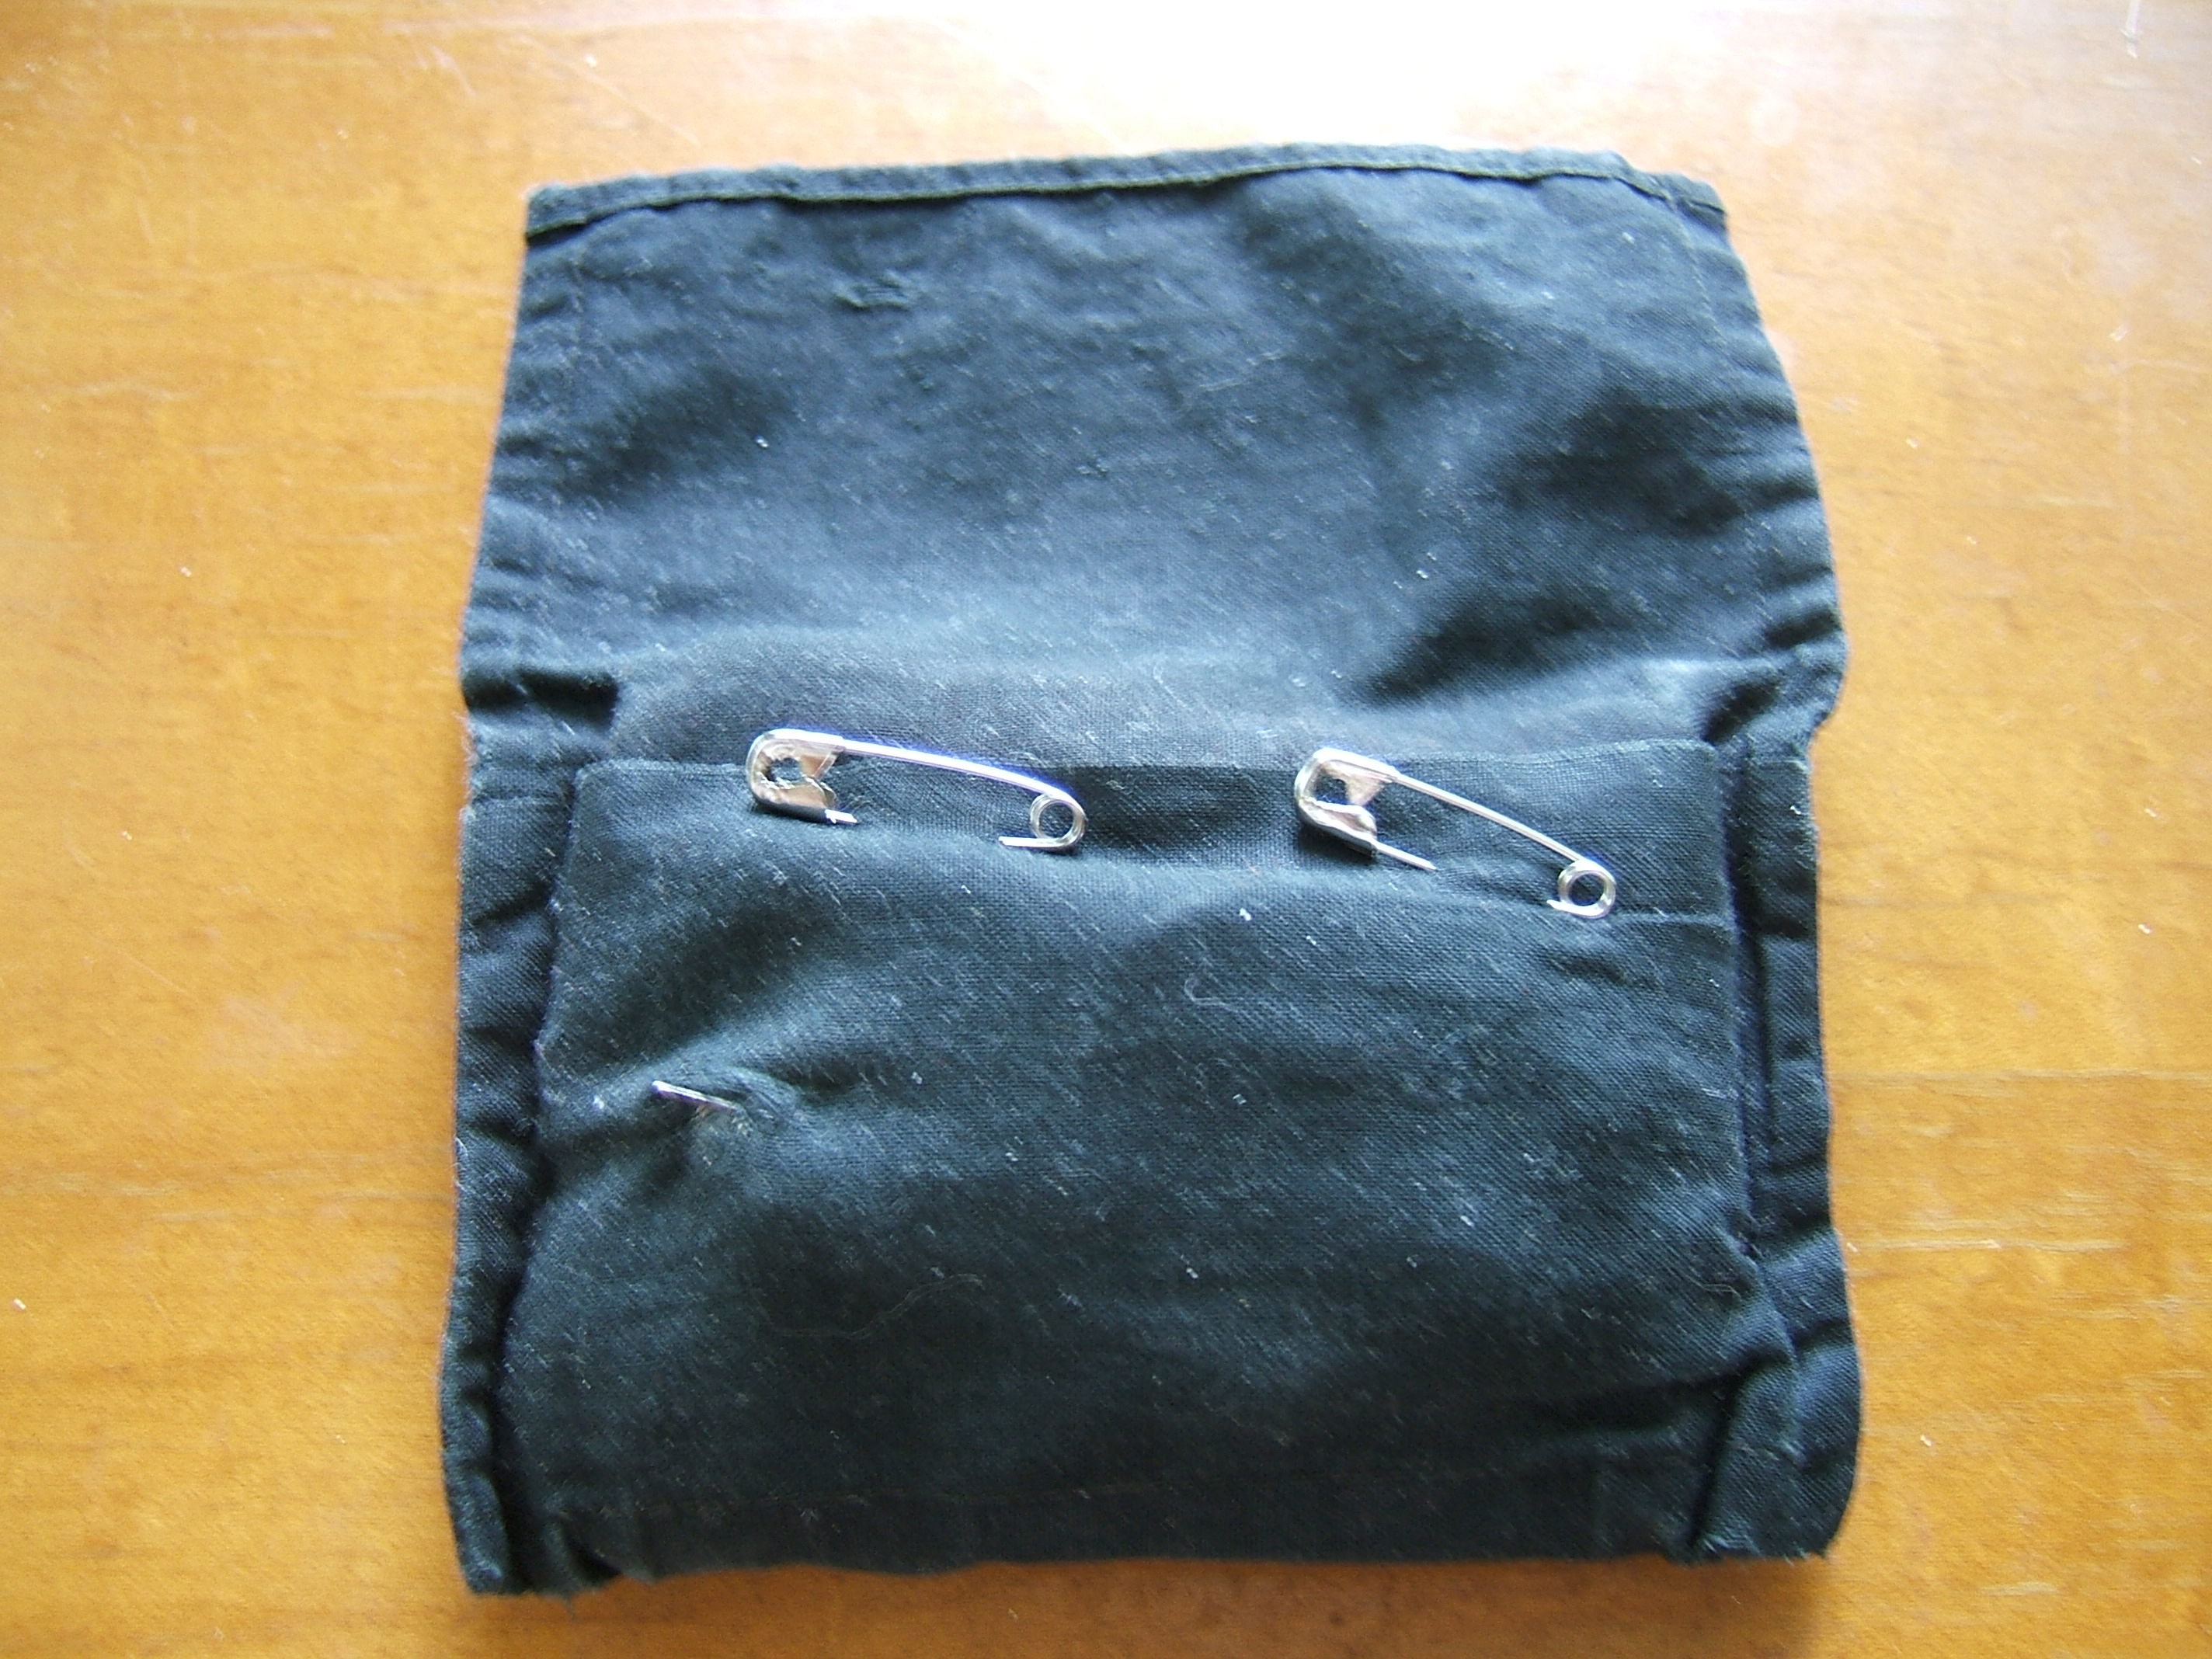 pocket bag, pin side (pins fuzzy)